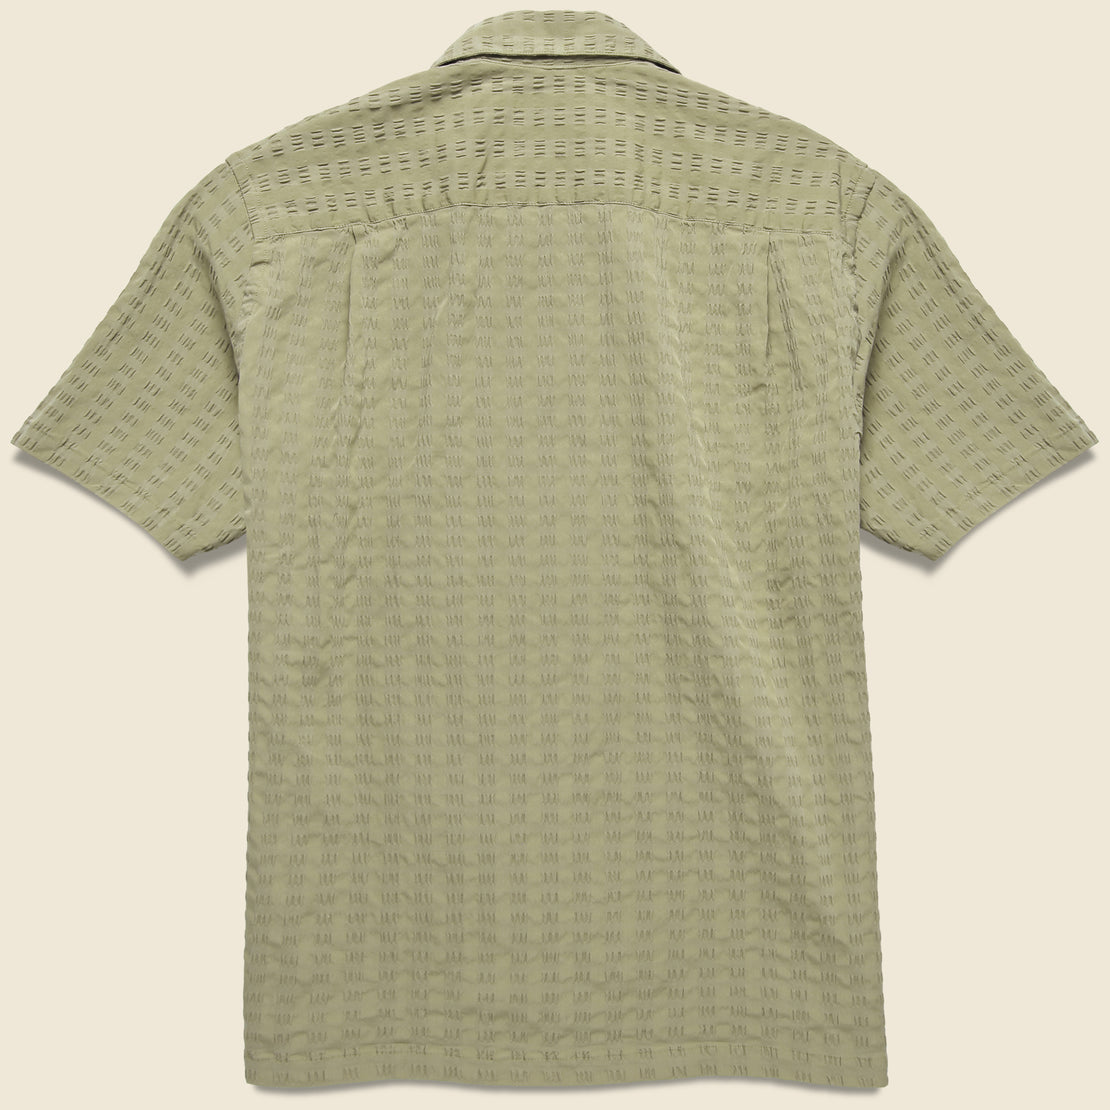 Big Square Seersucker Shirt - Khaki - Portuguese Flannel - STAG Provisions - Tops - S/S Woven - Seersucker